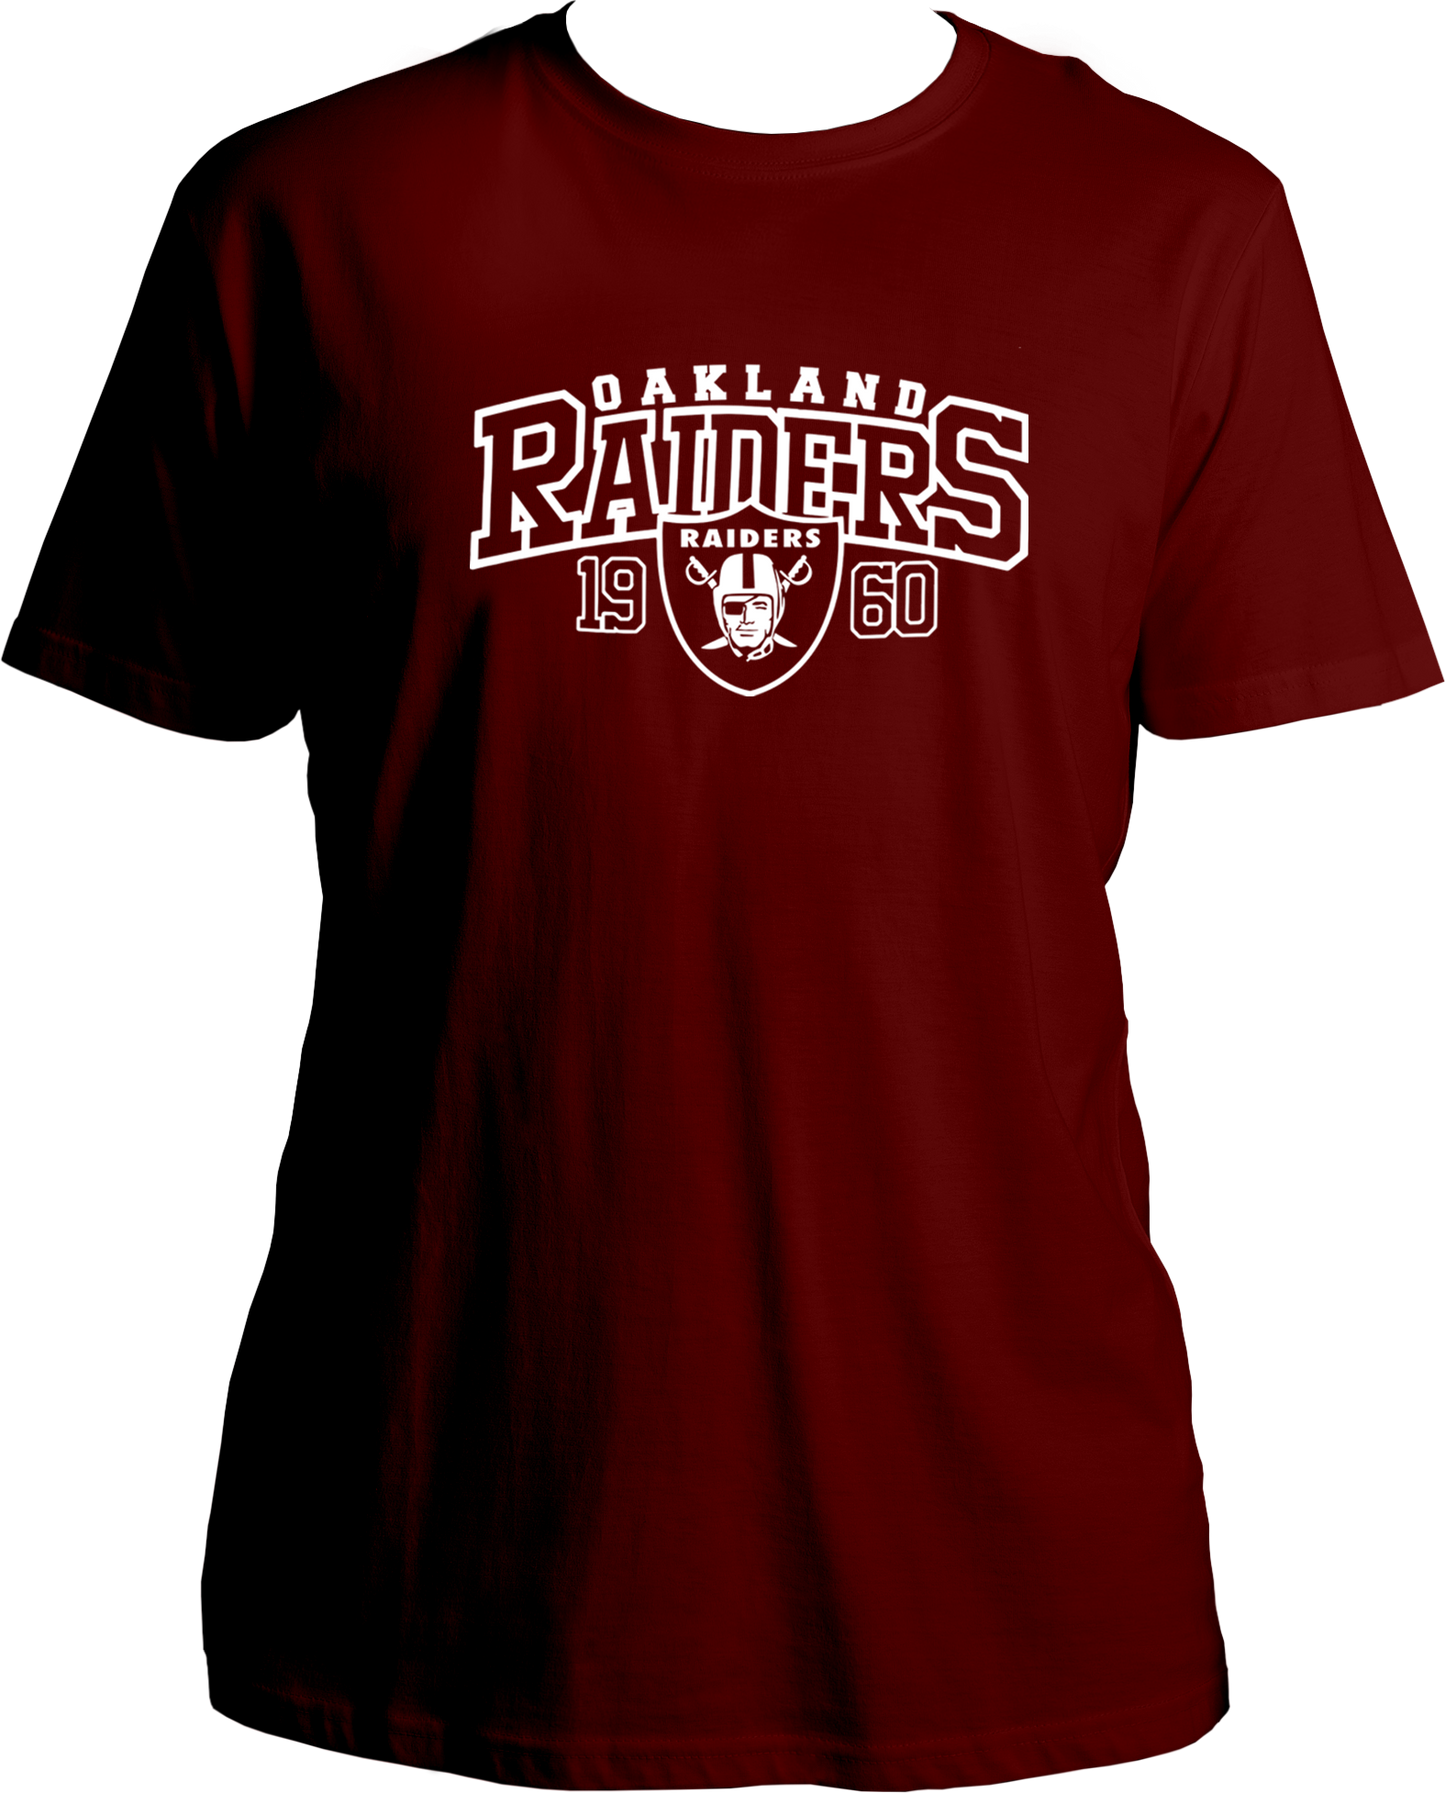 Raiders Unisex T-Shirts